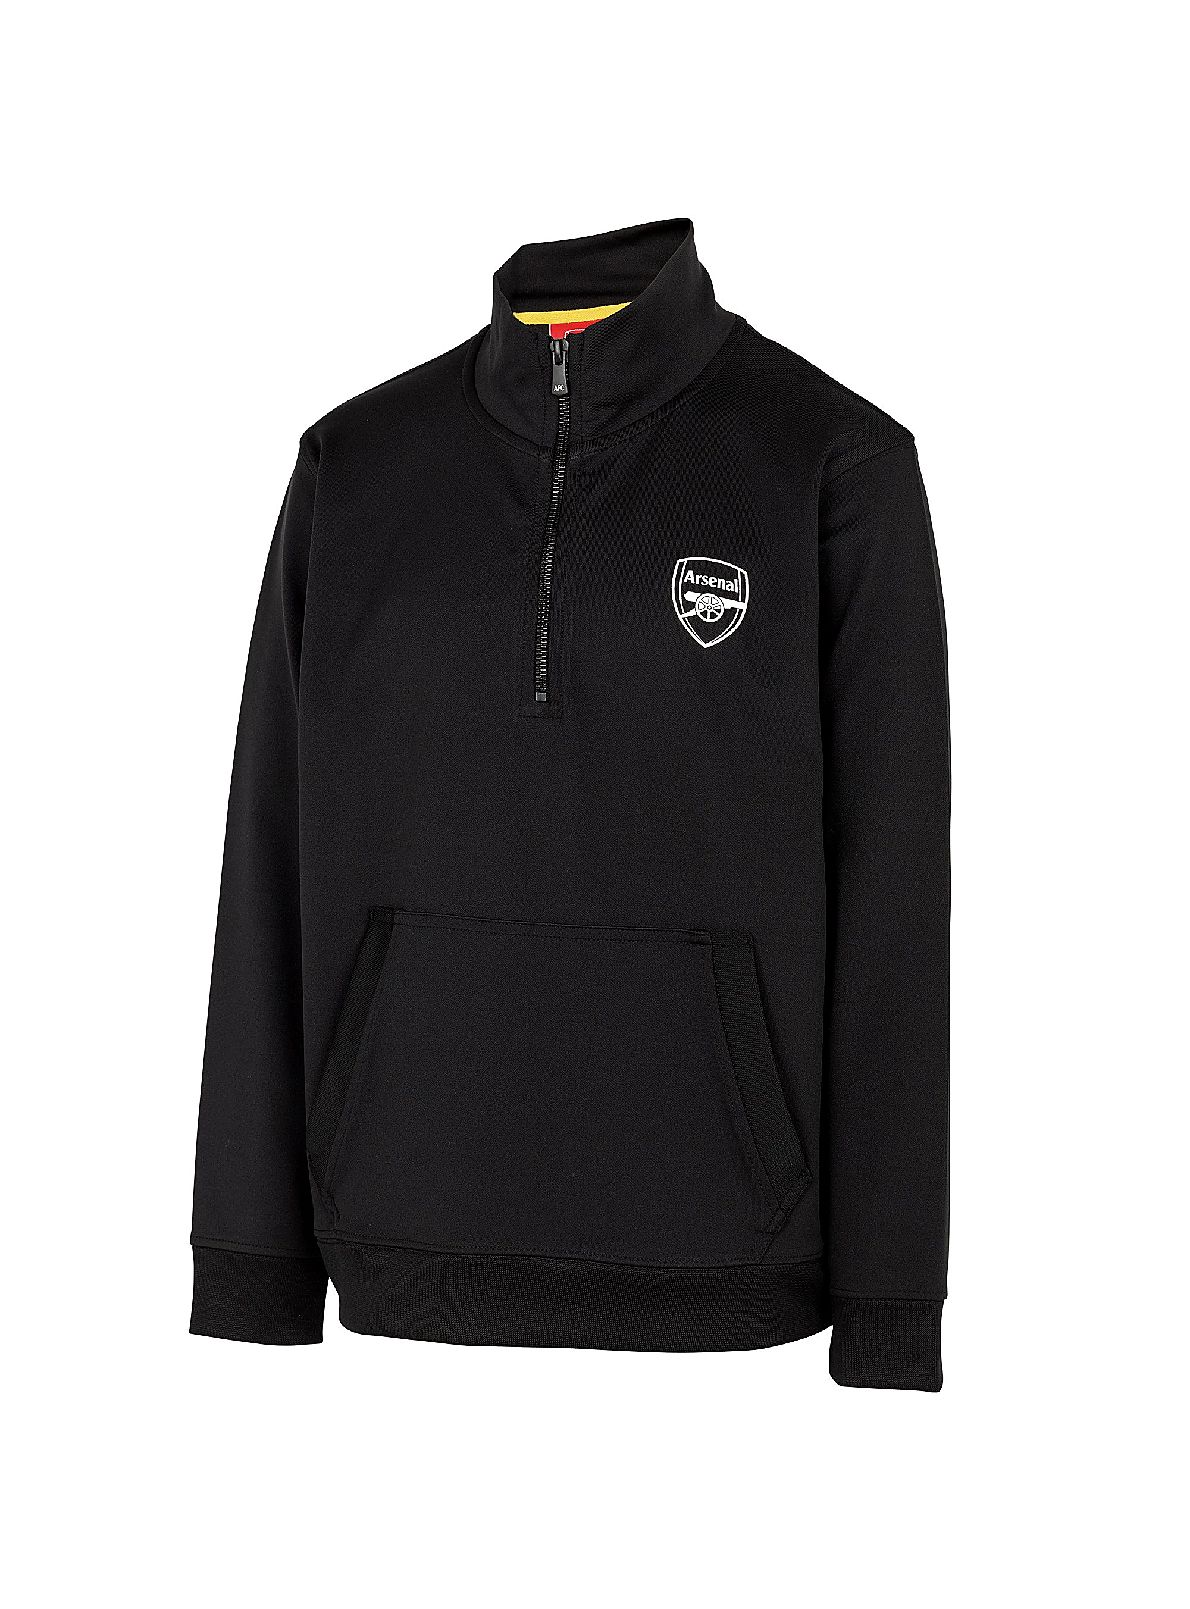 Arsenal Kids Leisure Black 1/4 Zip Tricot Sweatshirt | Official Online ...